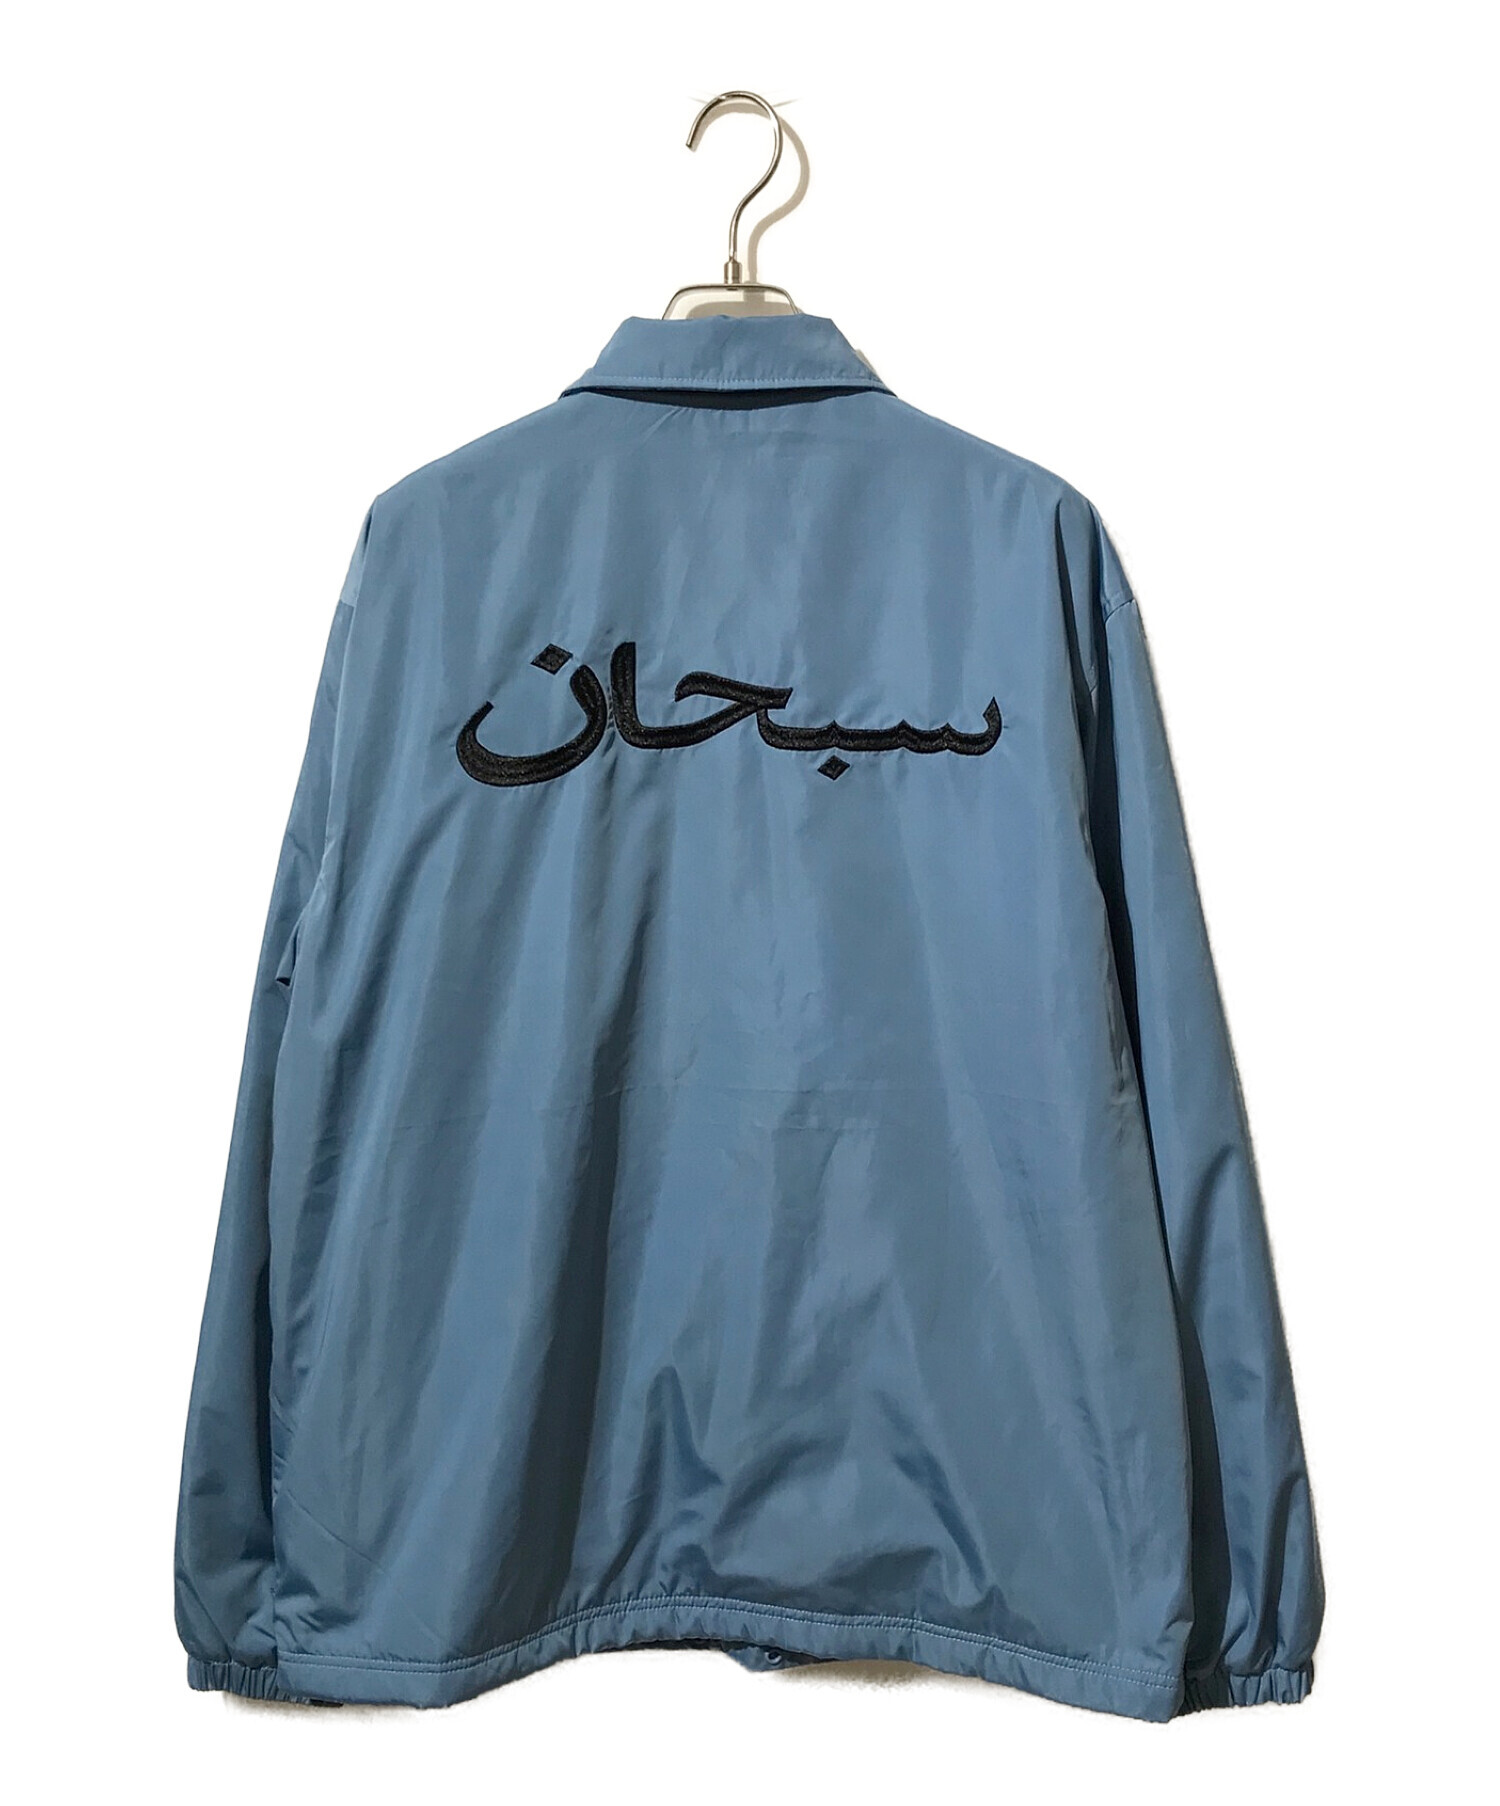 supreme arabic logo coach jacket アラビックM状態よく美品だと思います